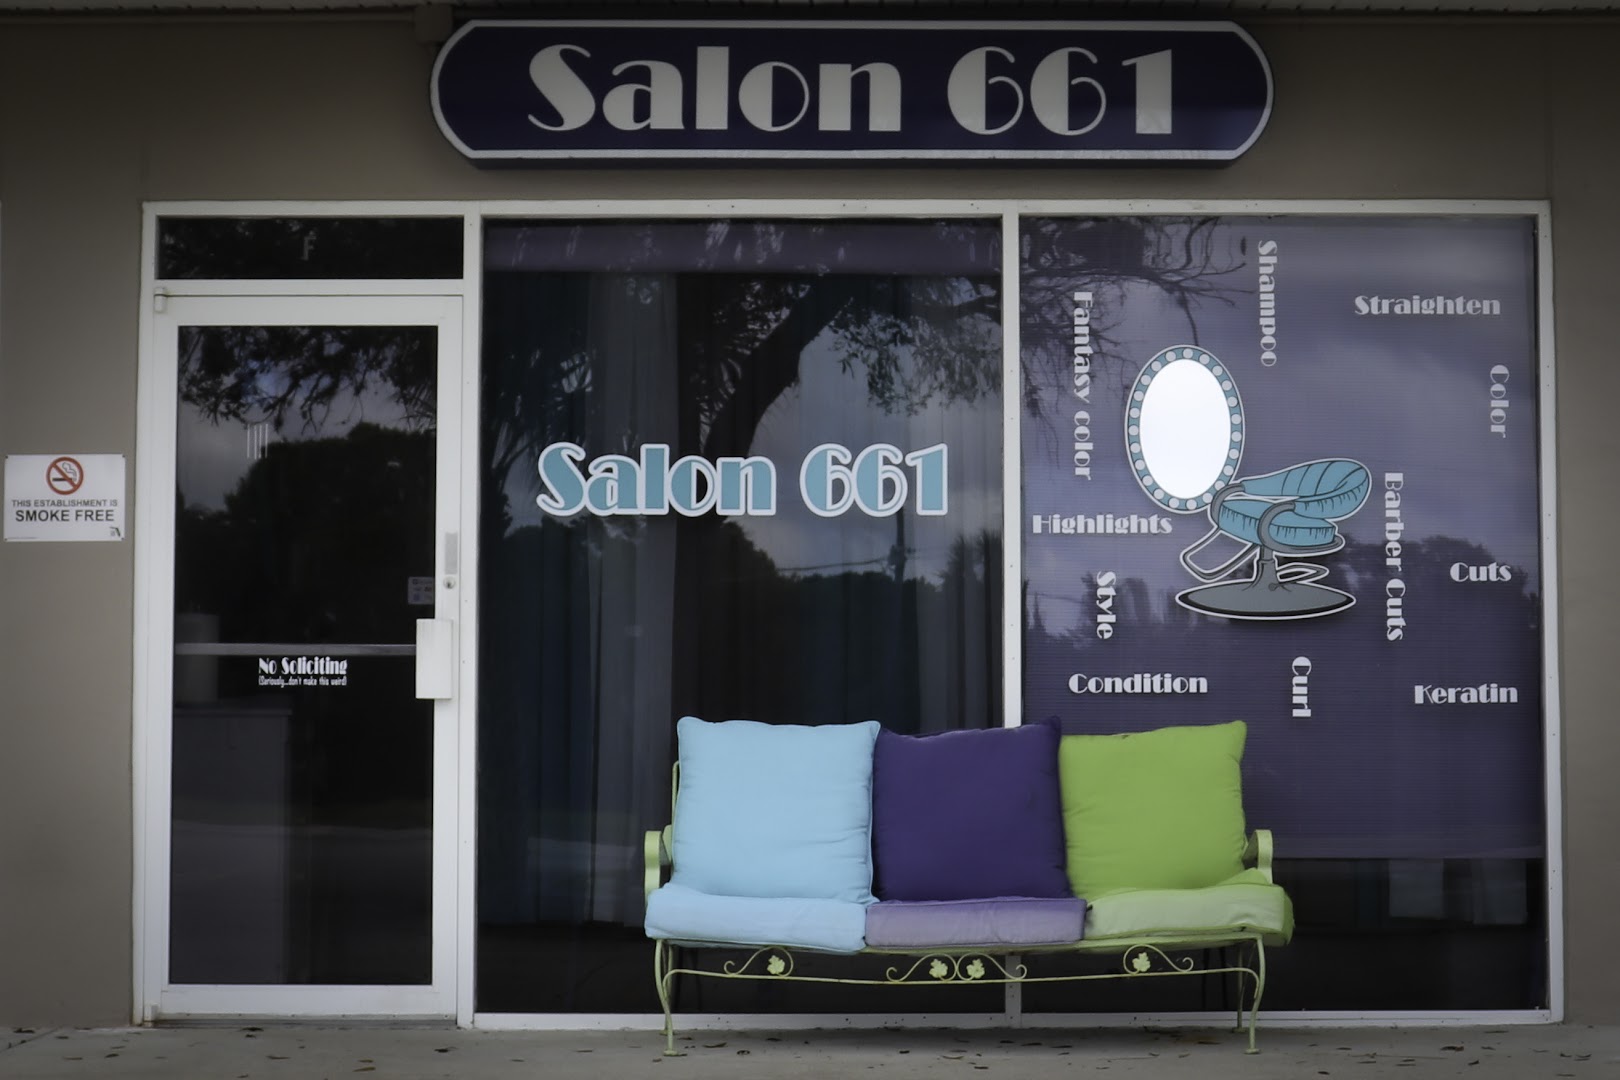 Salon 661